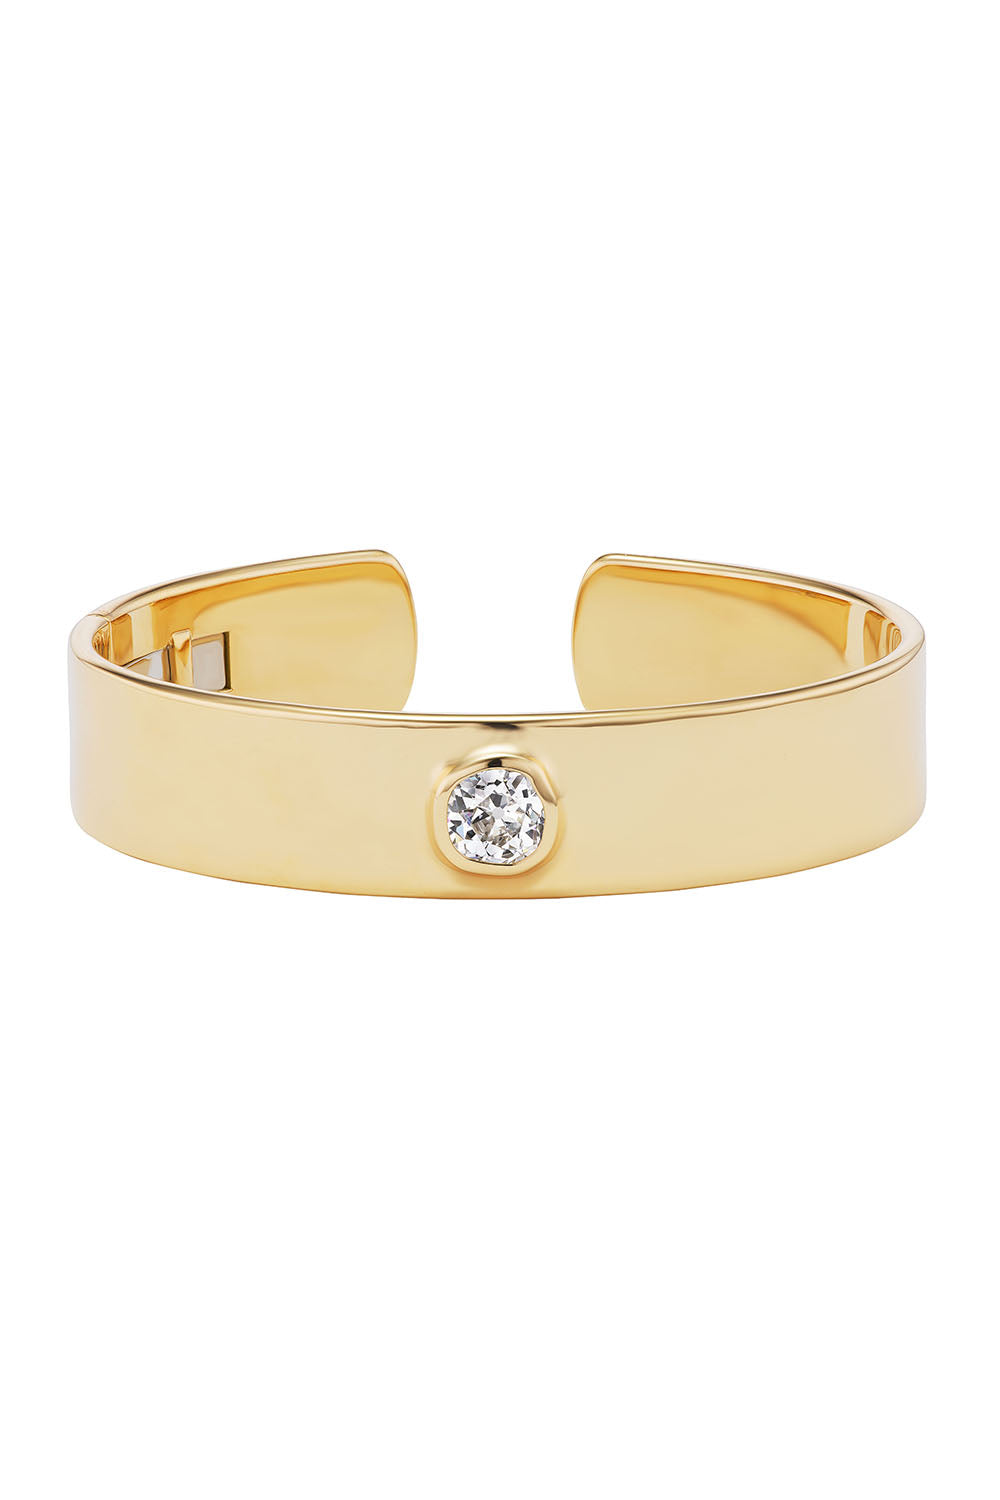 UNIFORM OBJECT-Diamond Handcuff Bracelet-YELLOW GOLD